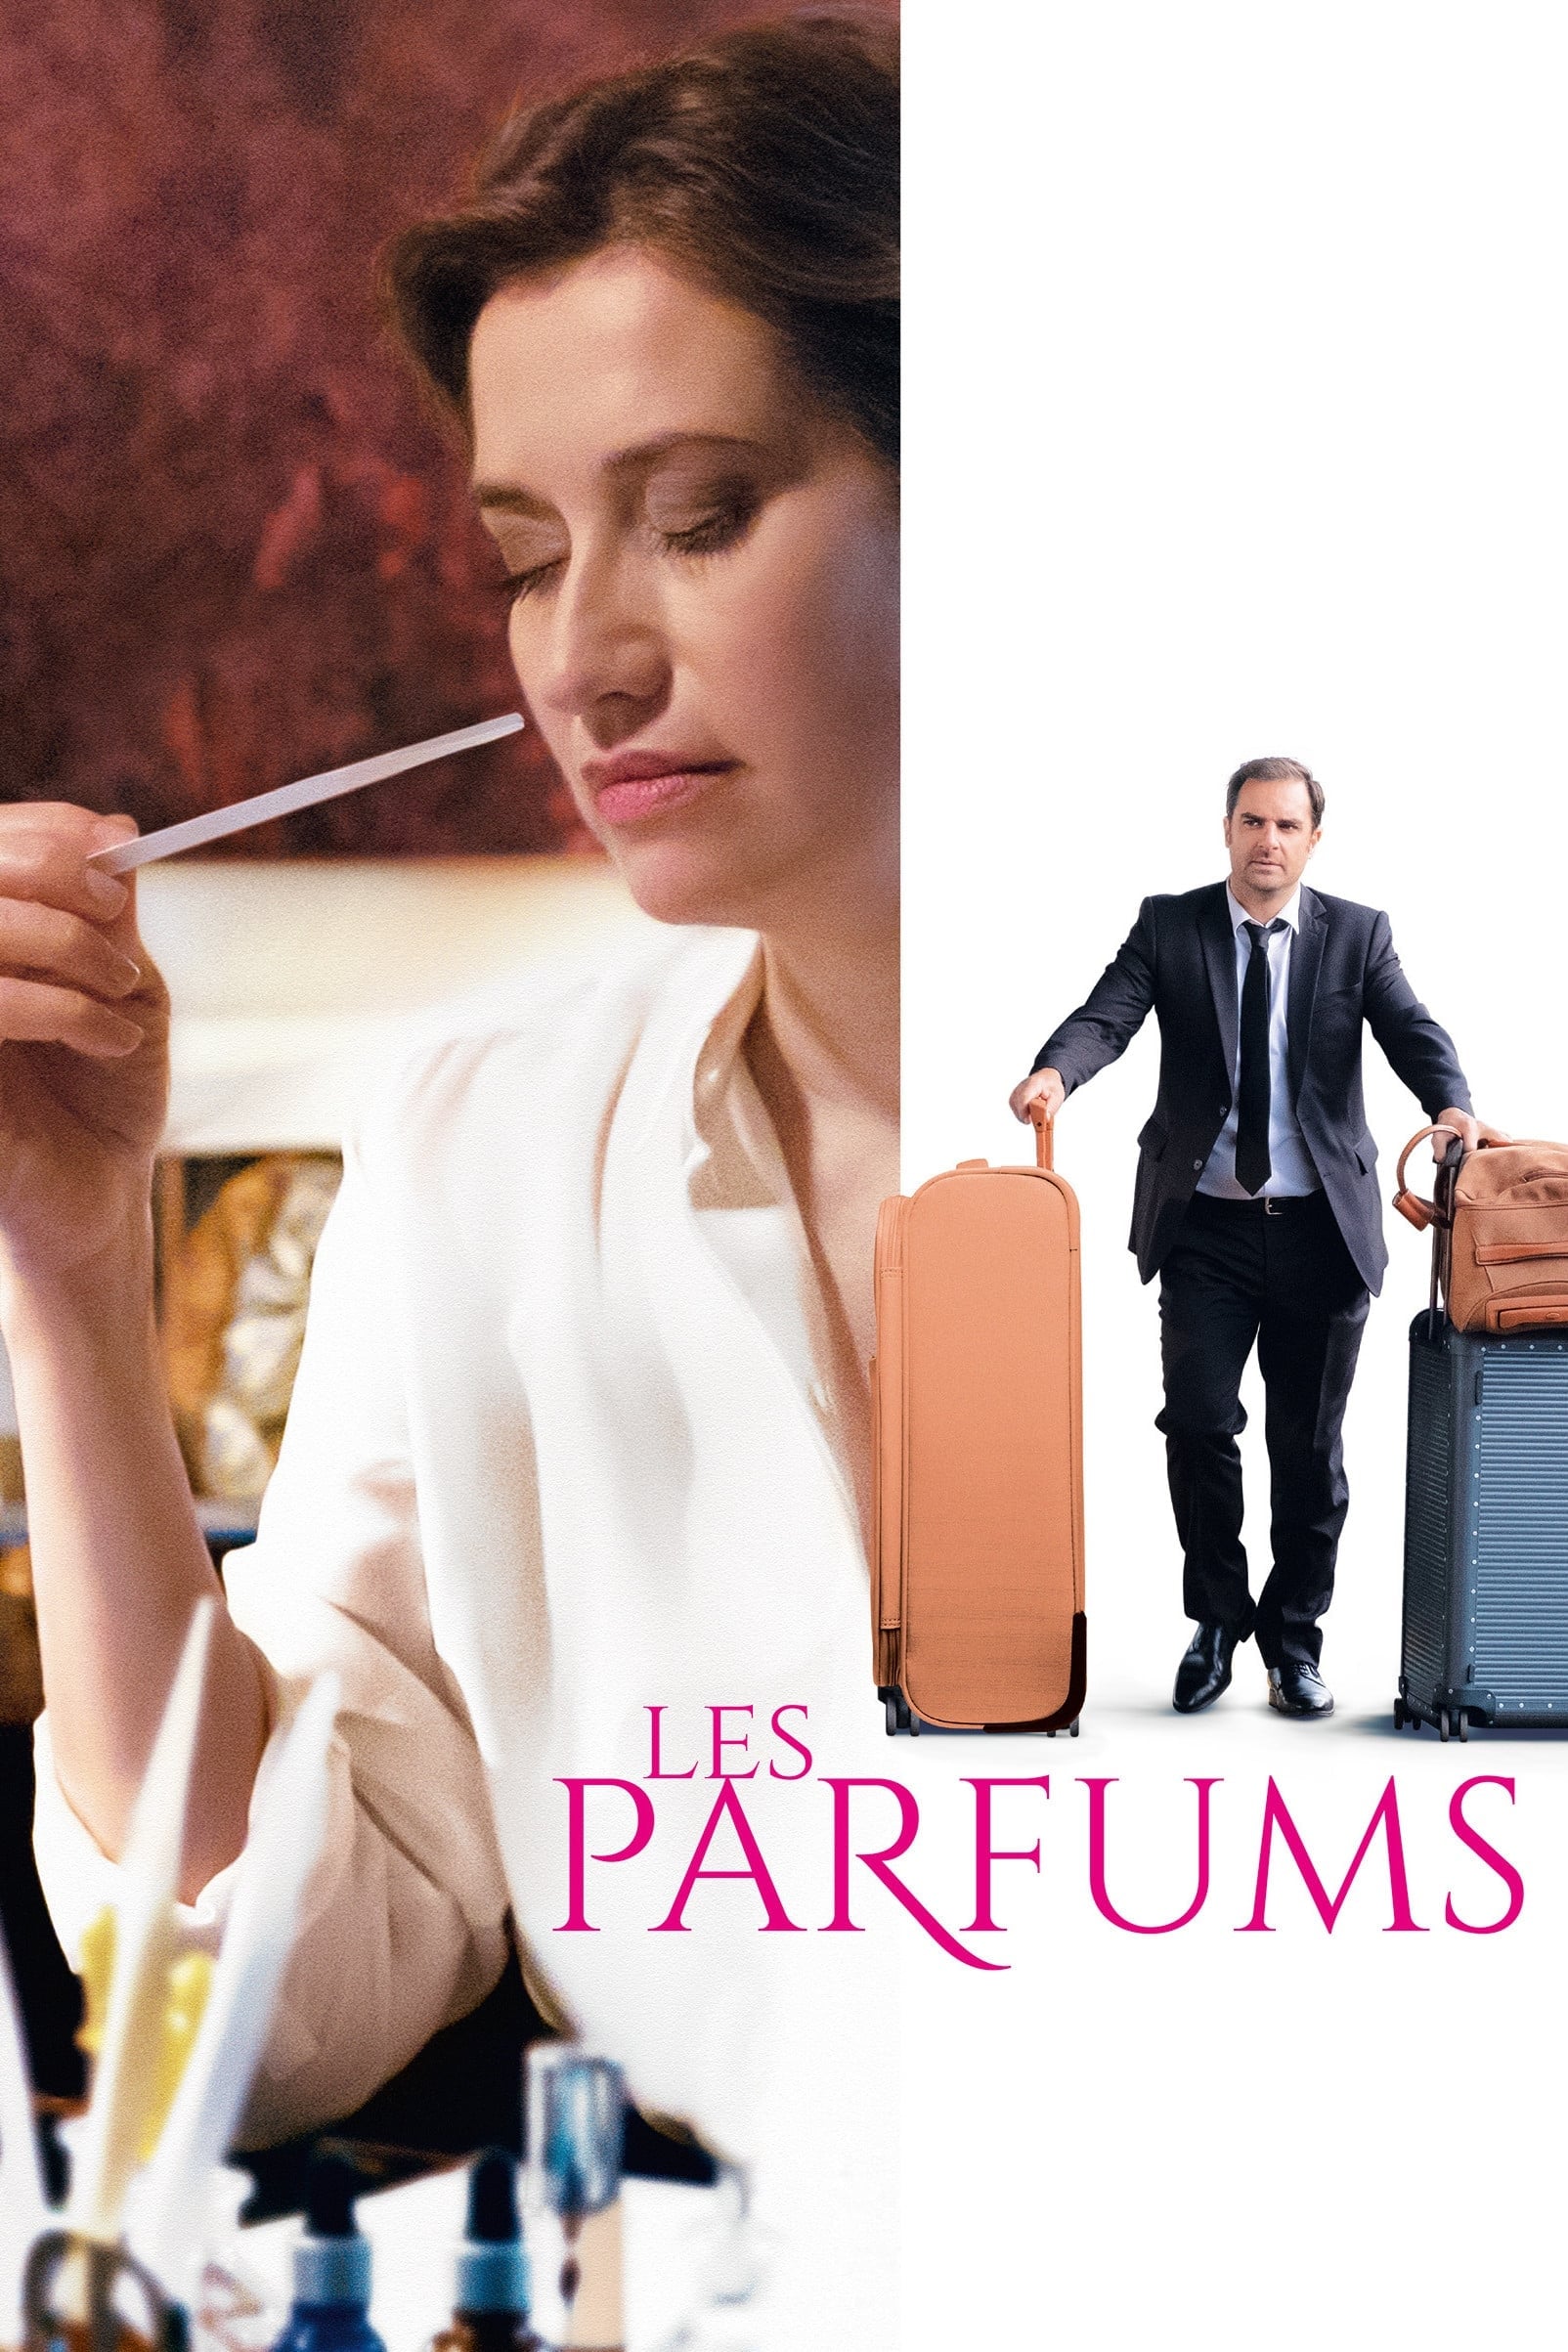 Les parfums [Sub-ITA] [HD] (2019)